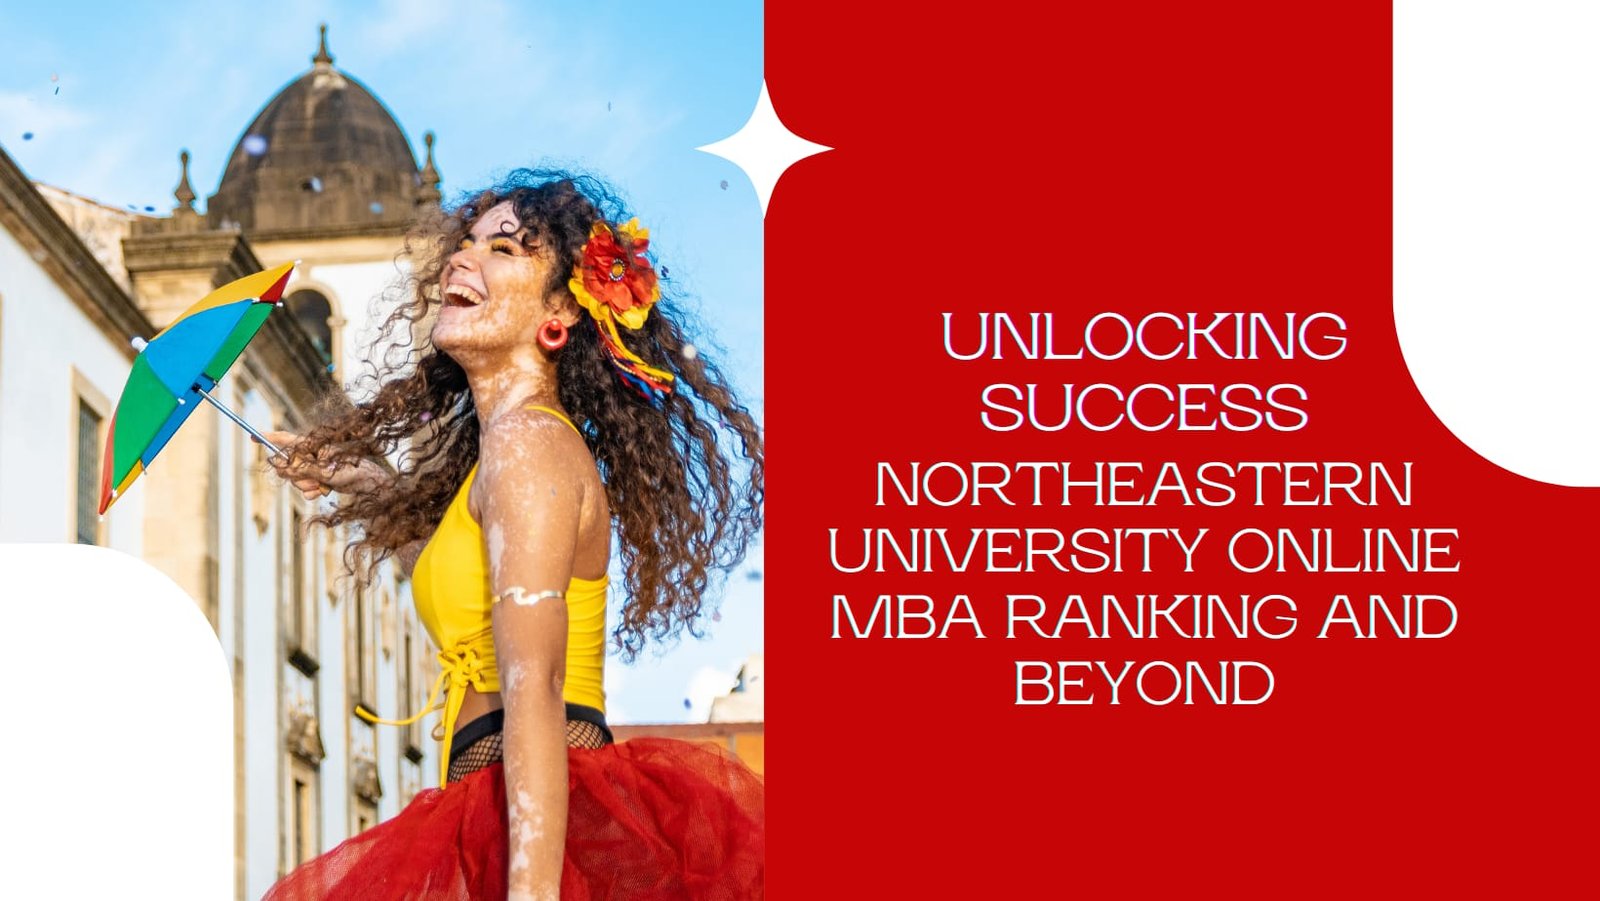 Unlocking Success: Northeastern University Online MBA Ranking and Beyond